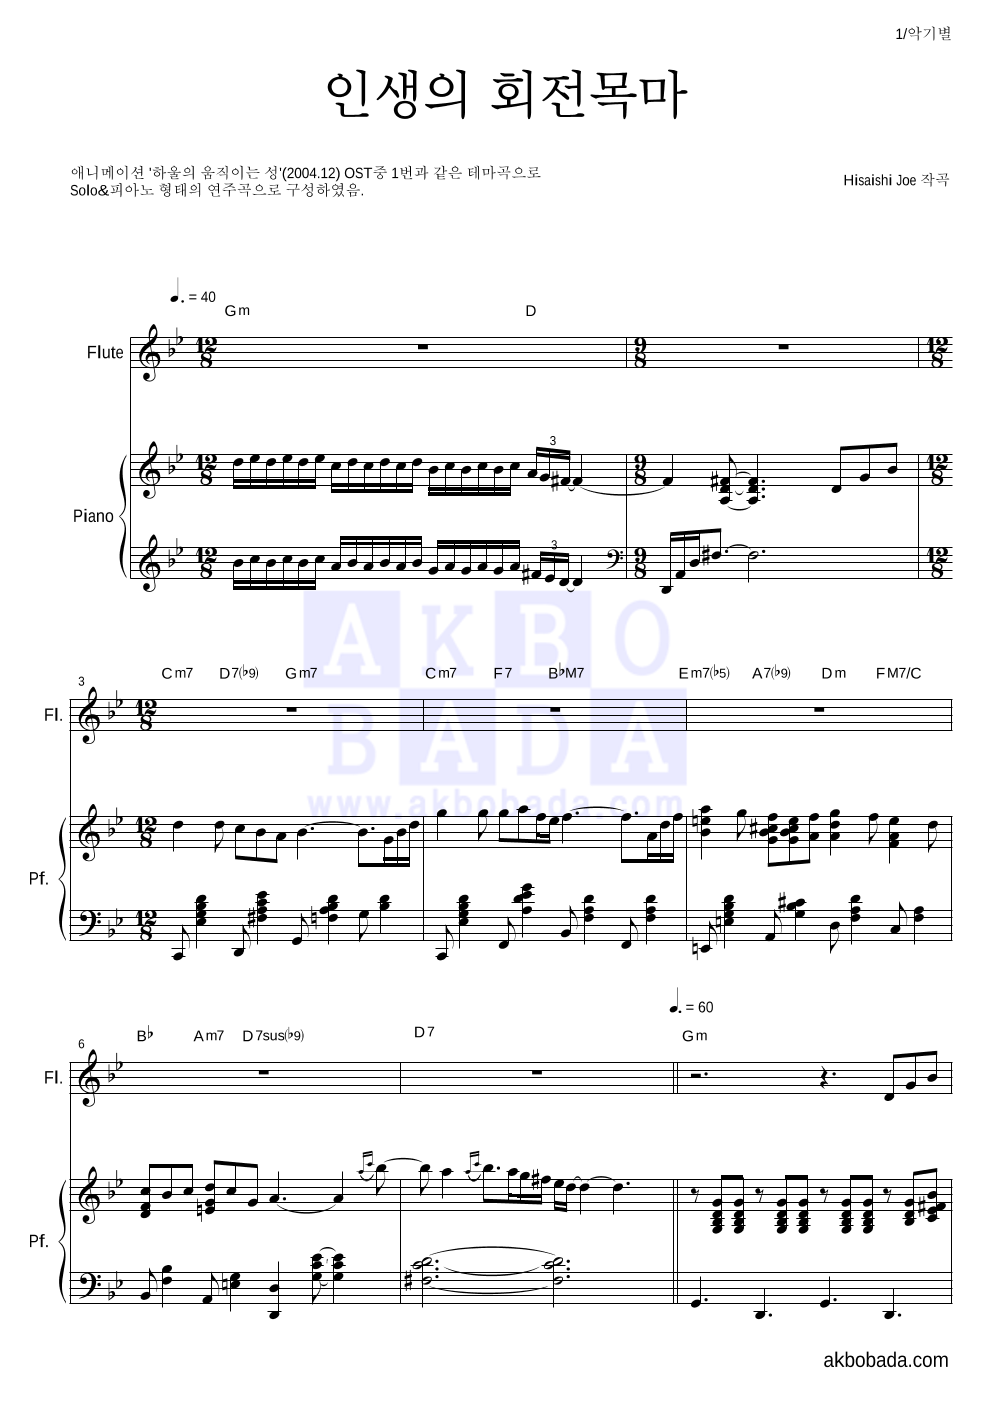 Hisaishi Joe - 인생의 회전목마 플룻&피아노 악보 